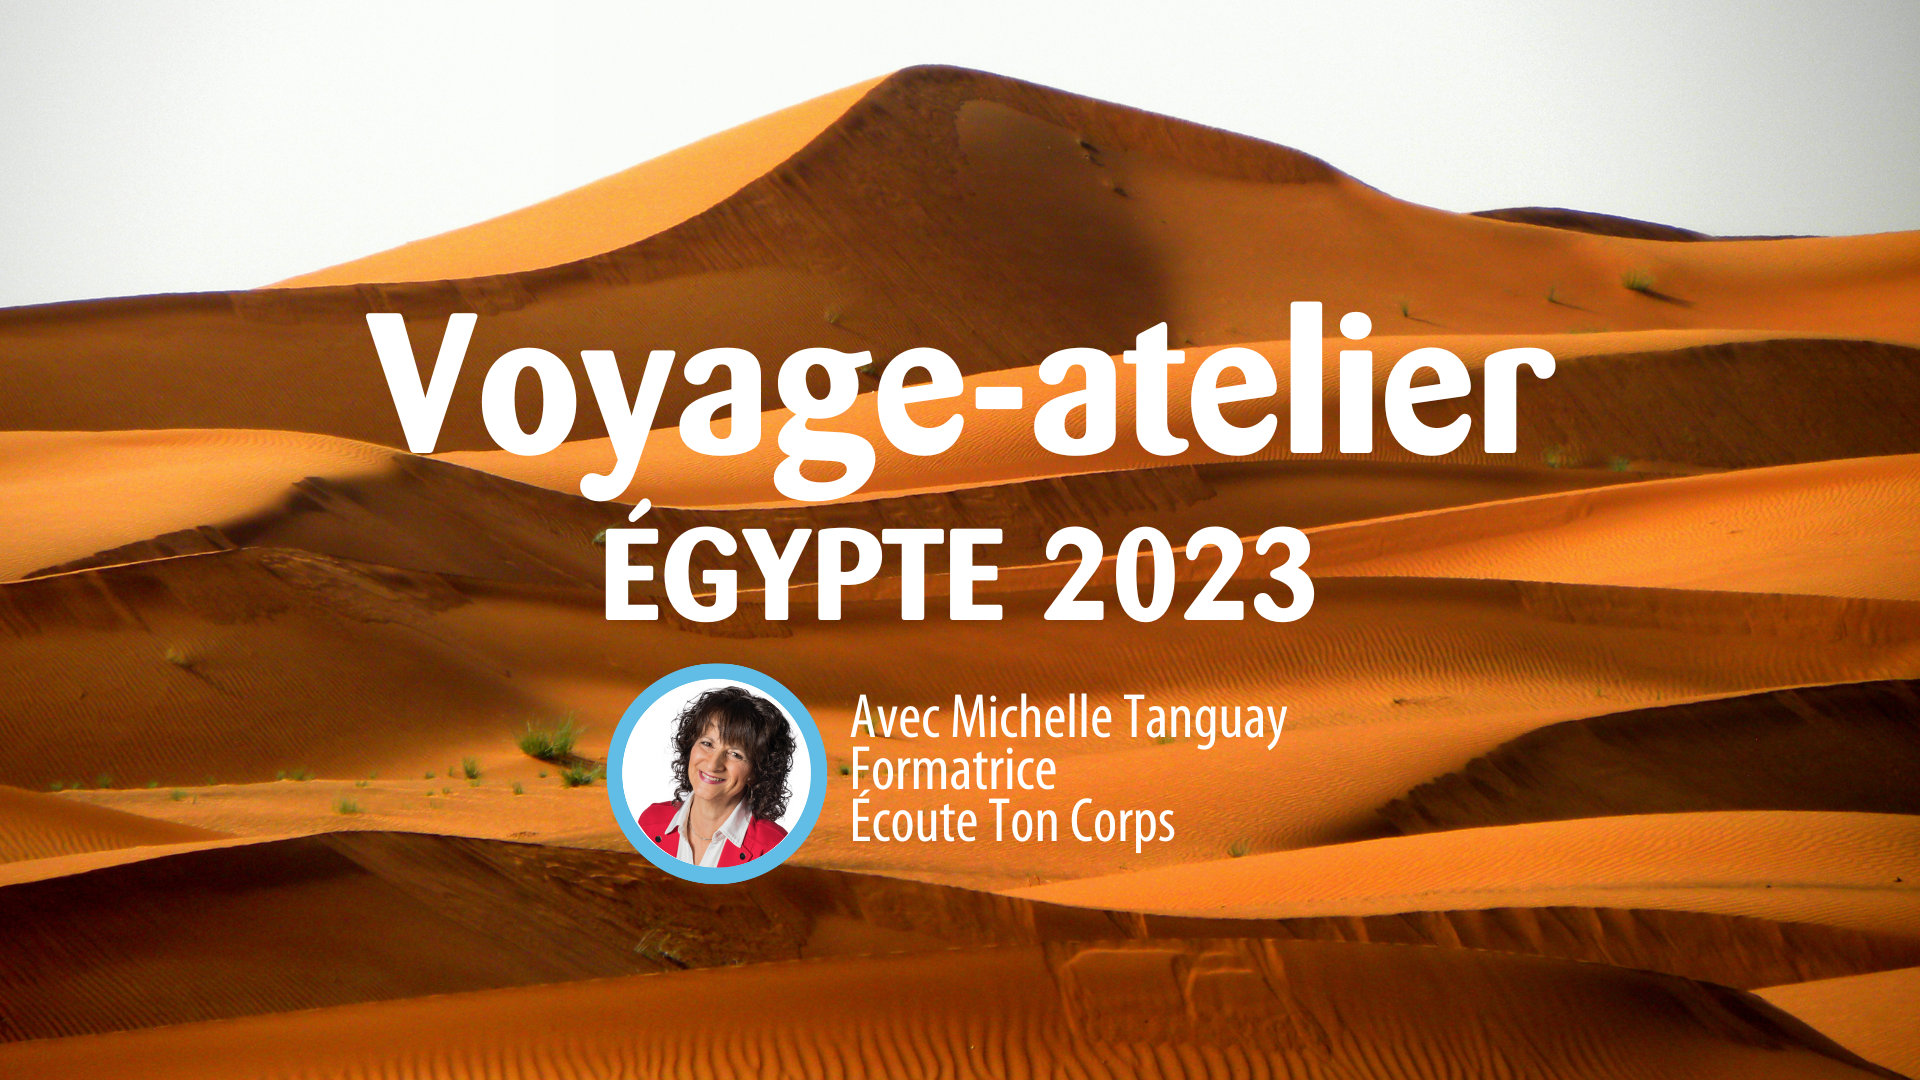 Voyage-atelier Égypte 2023.png